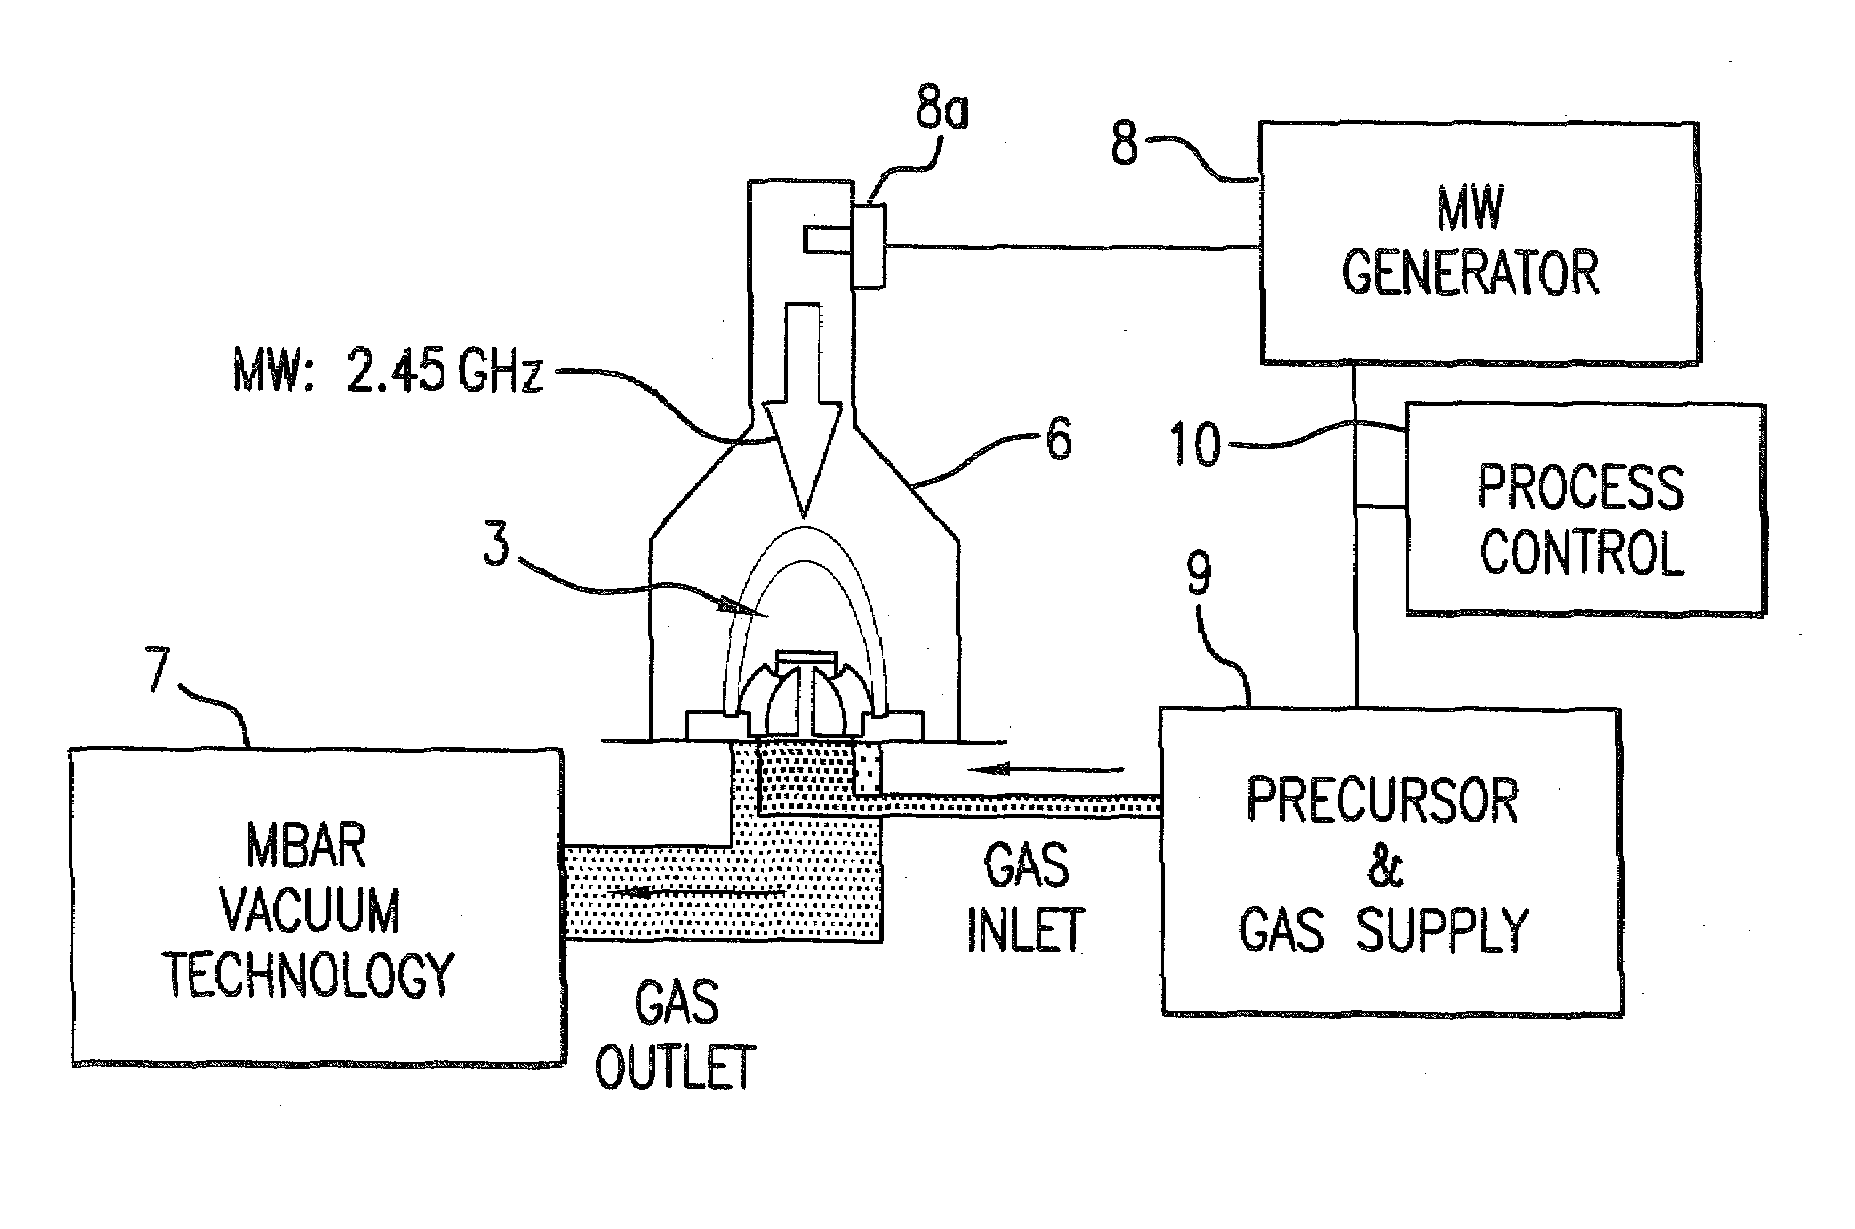 Method for coating the quartz burner of an HID lamp